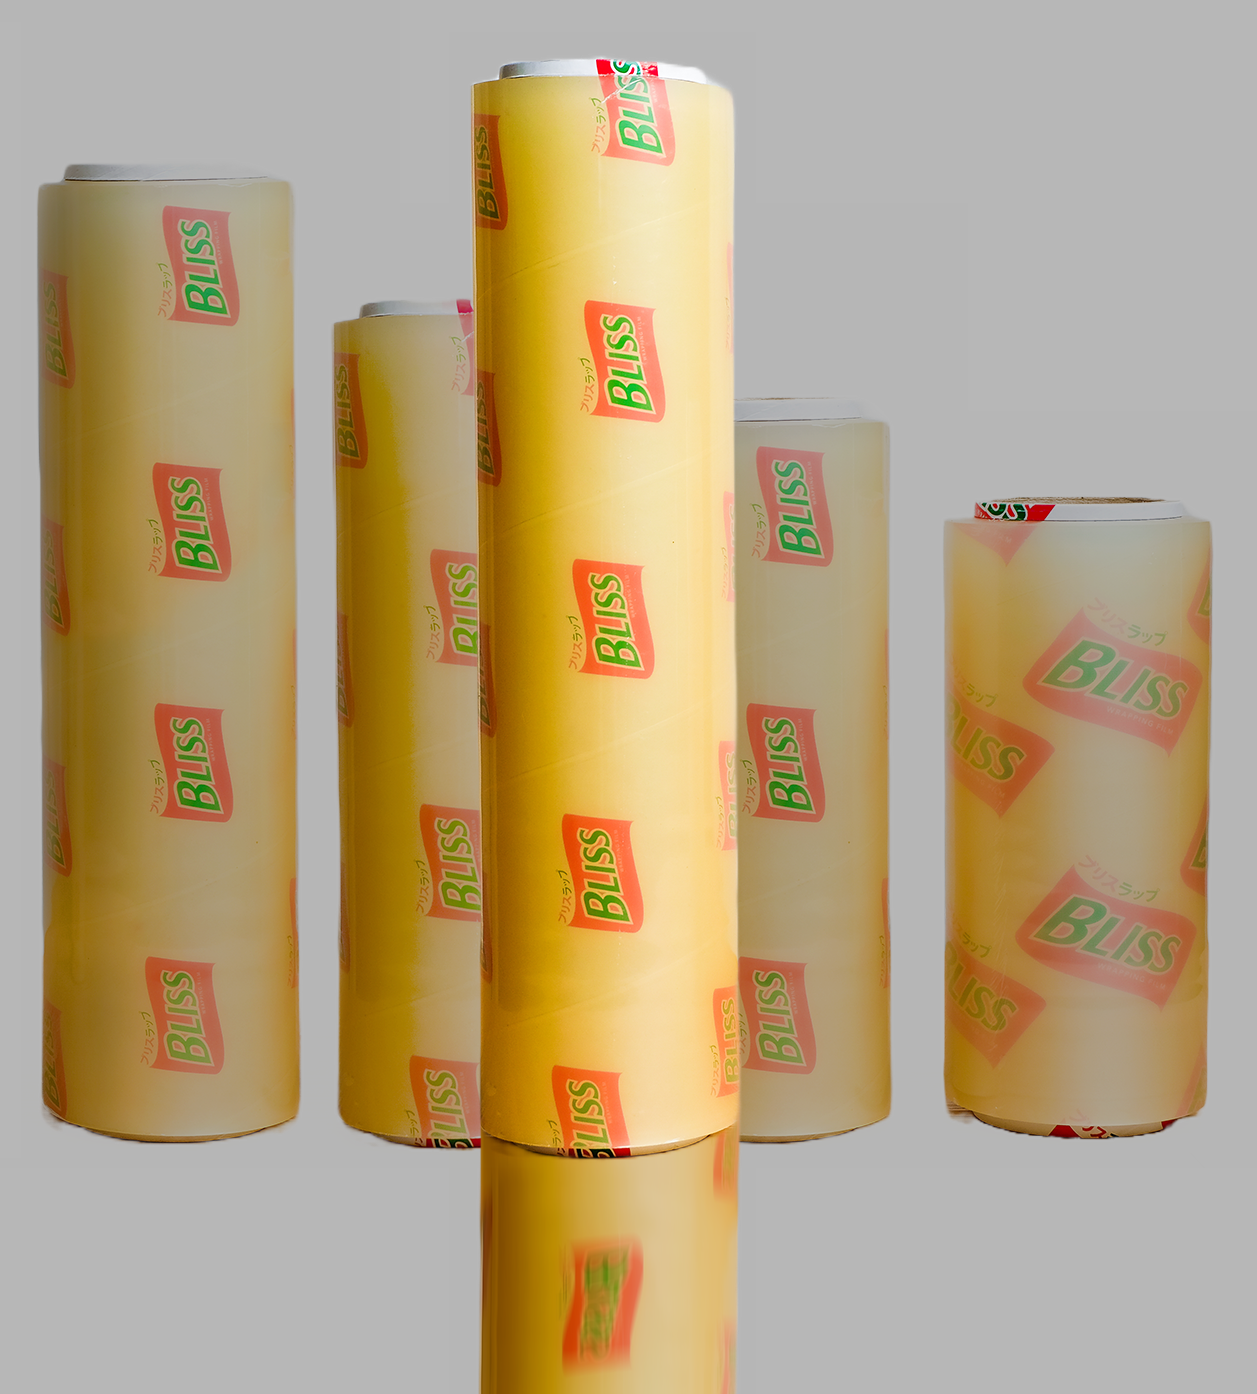 Bliss PVC Cling Wrap Plastik ukuran lebar 45cm. plastik pvc cling wrap terbaik lebih murah dan berkualitas dari best fresh, total, raypin bermerk bliss